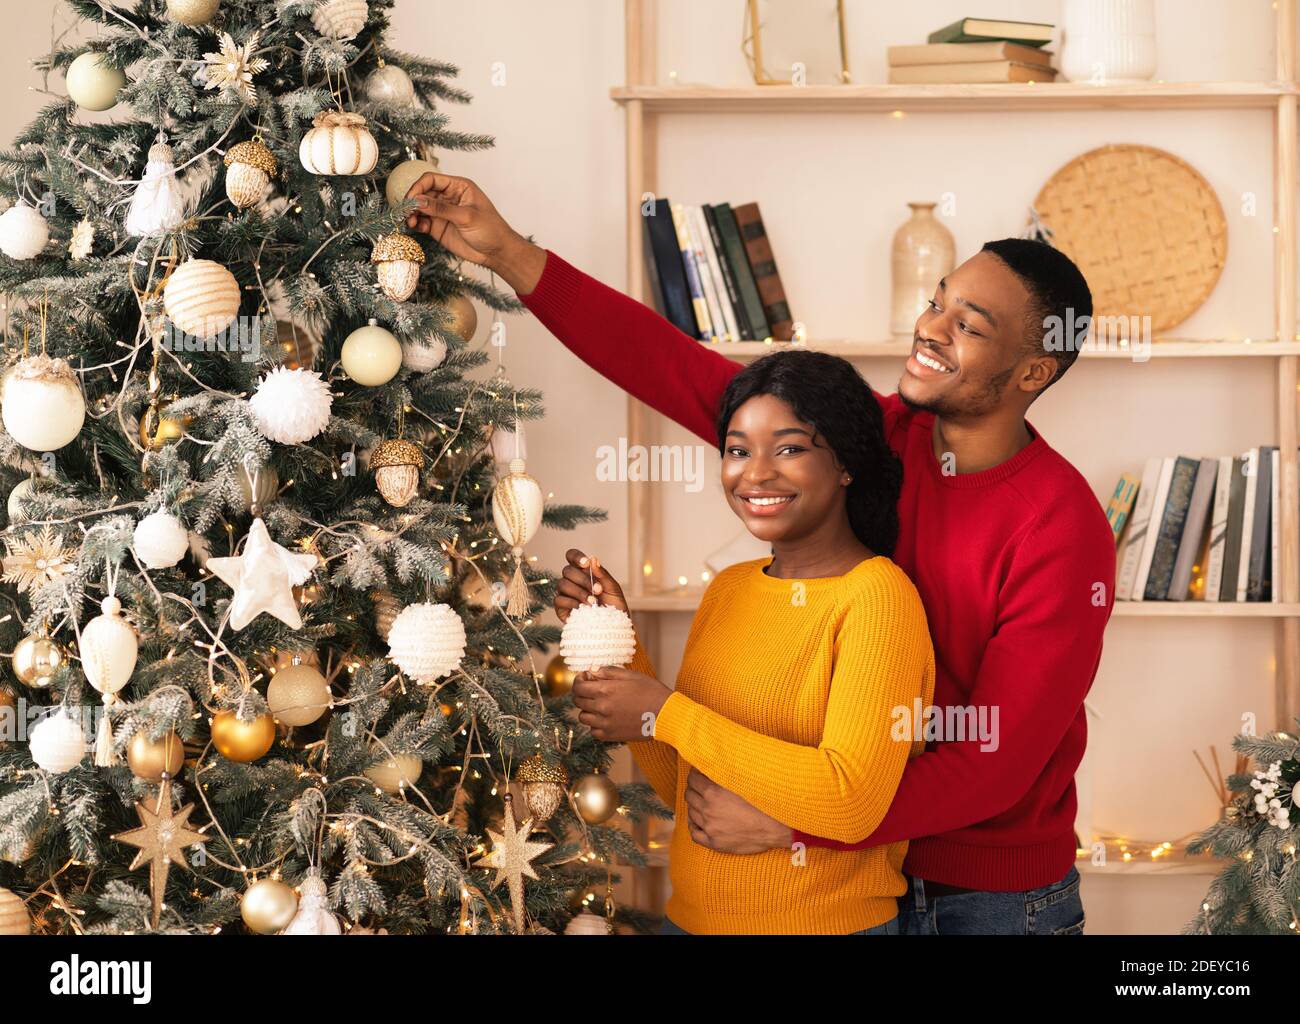 Christmas decor, happiness together and Merry Christmas Stock Photo